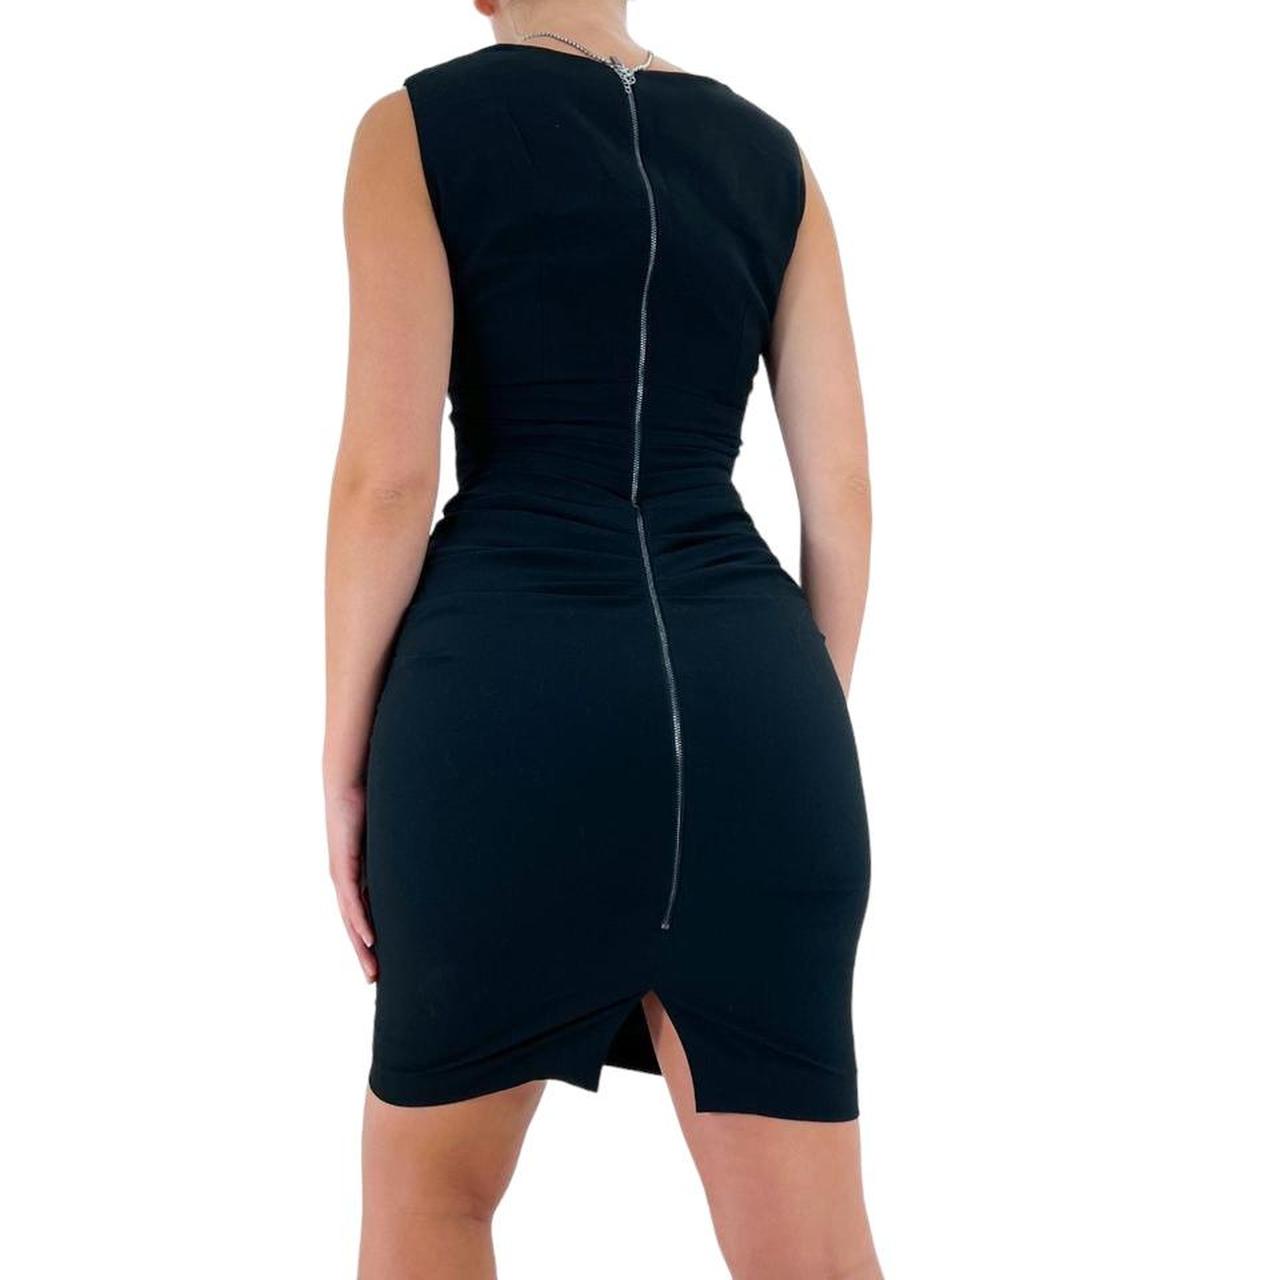 Bcbg Max Azria Designer Black V-Neck Dress [S]